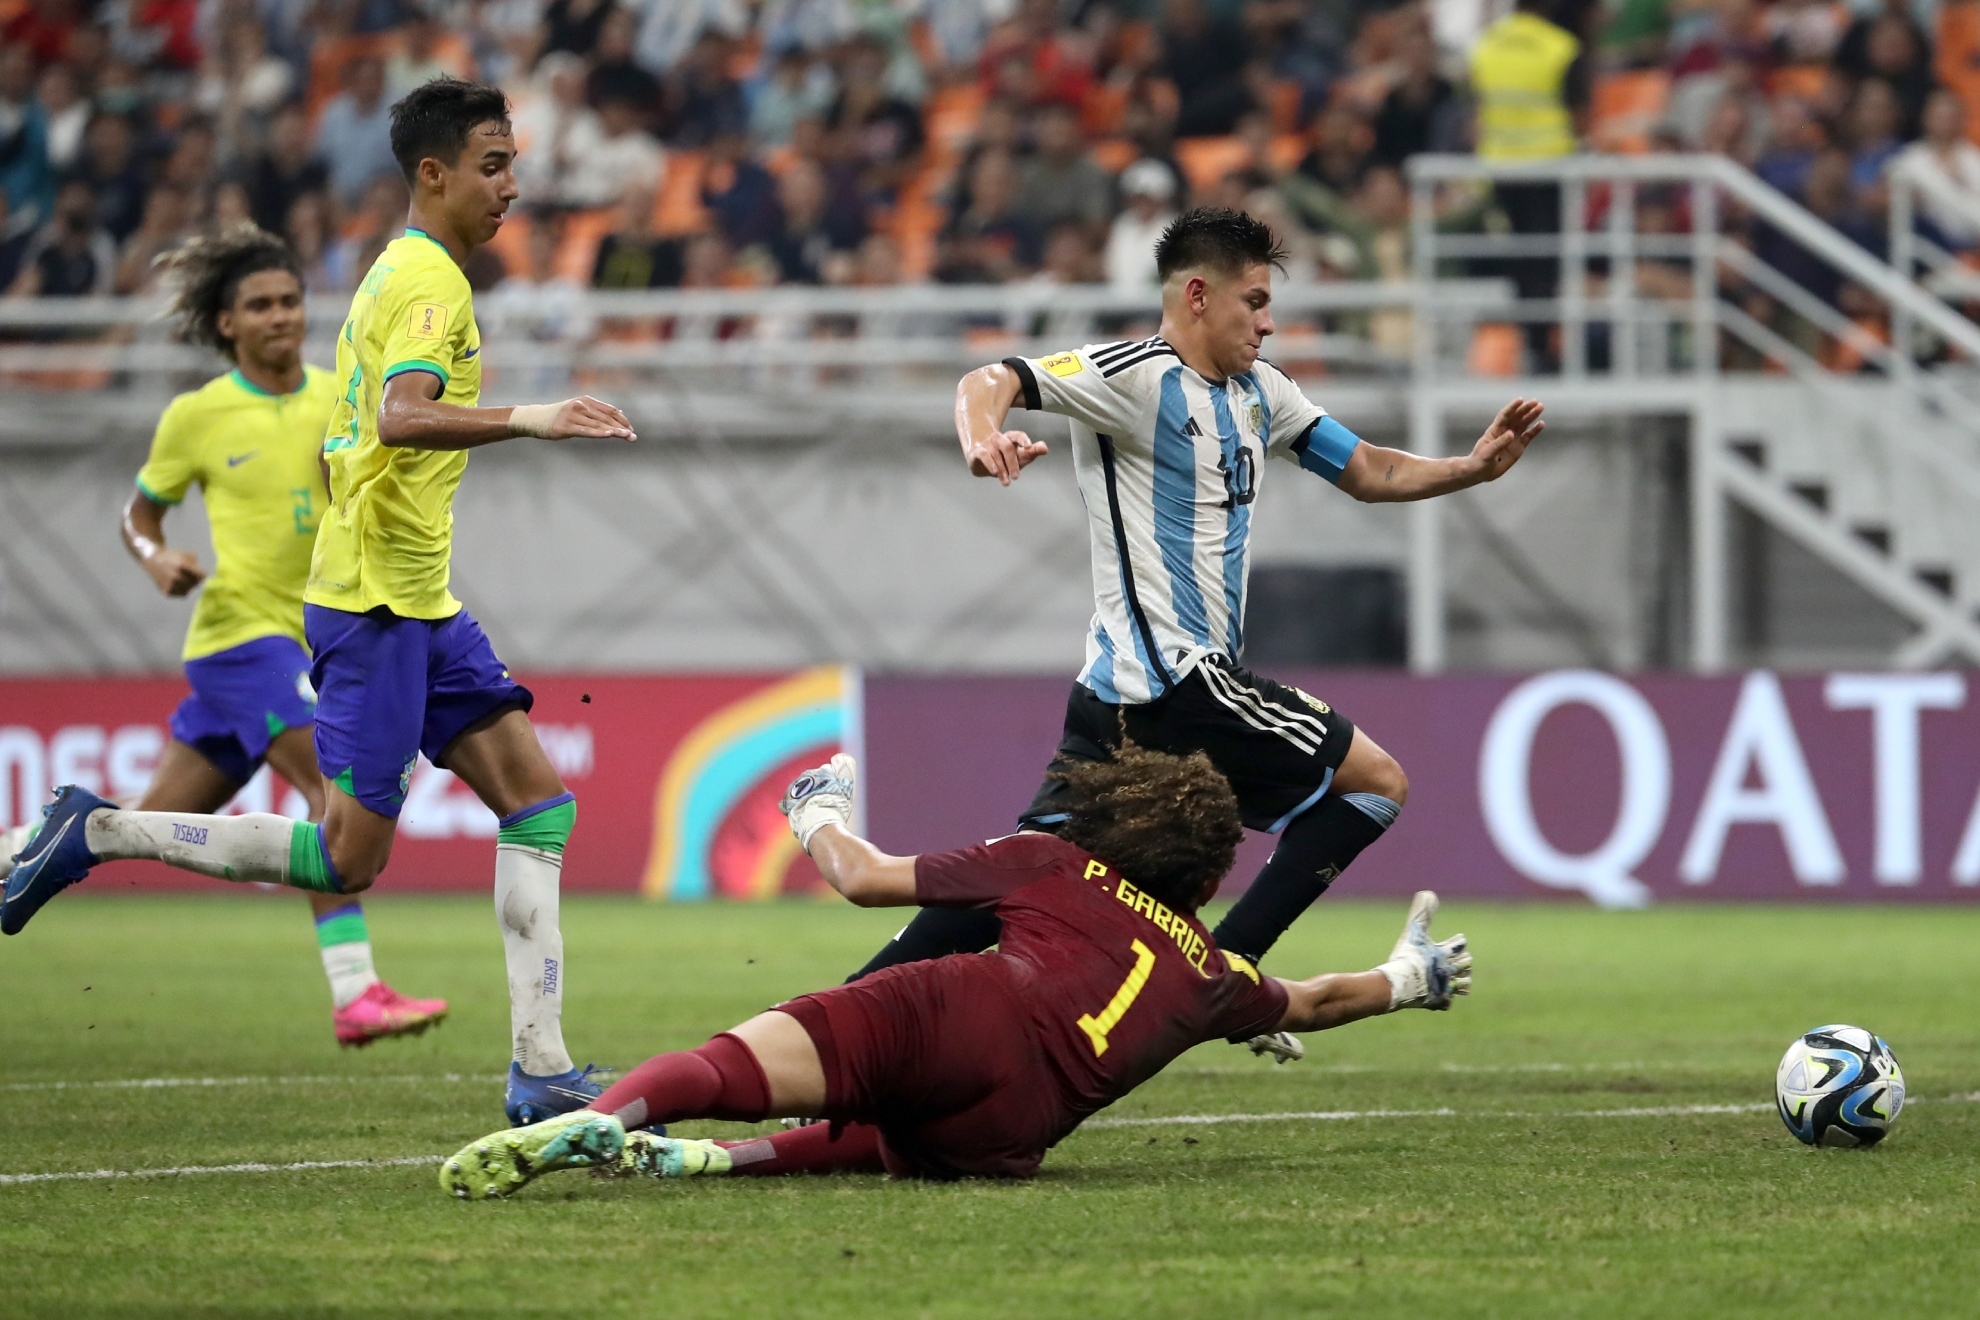 Claudio Echeverri regatea al meta de Brasil para anotar el tercero de Argentina.